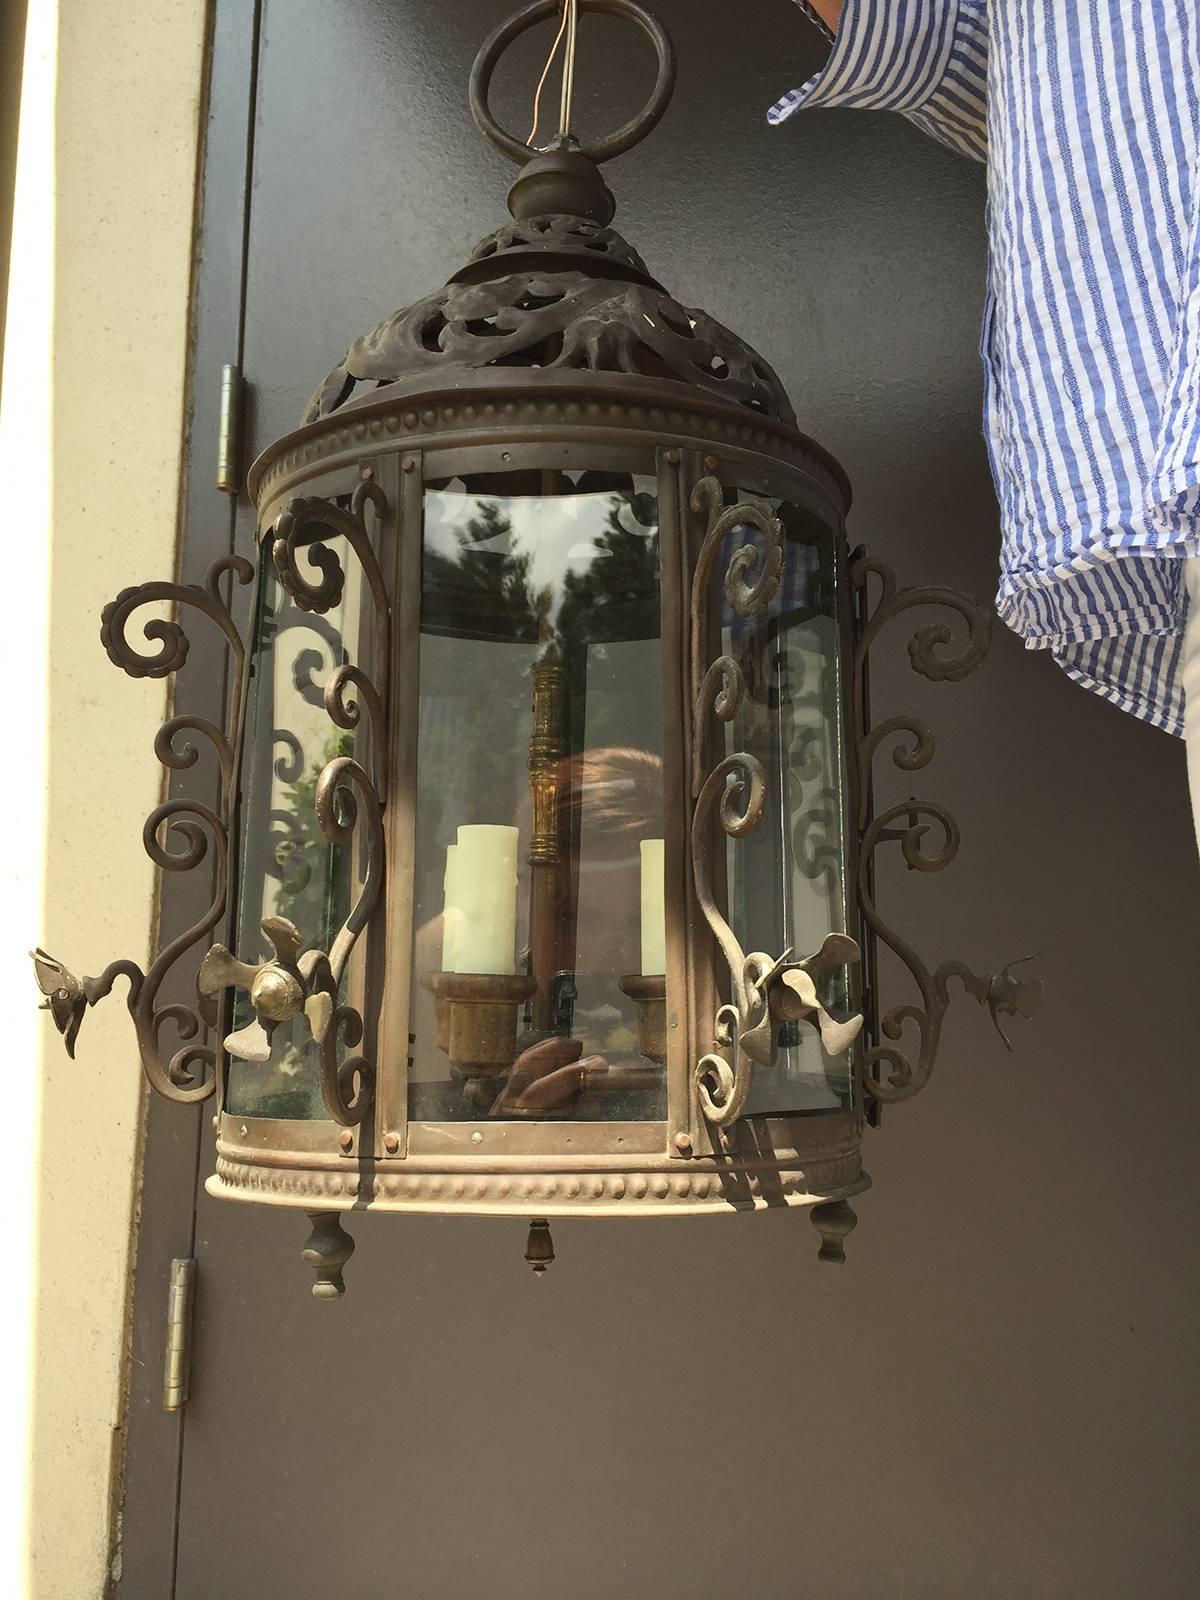 19th-20th century charming Dutch lantern.